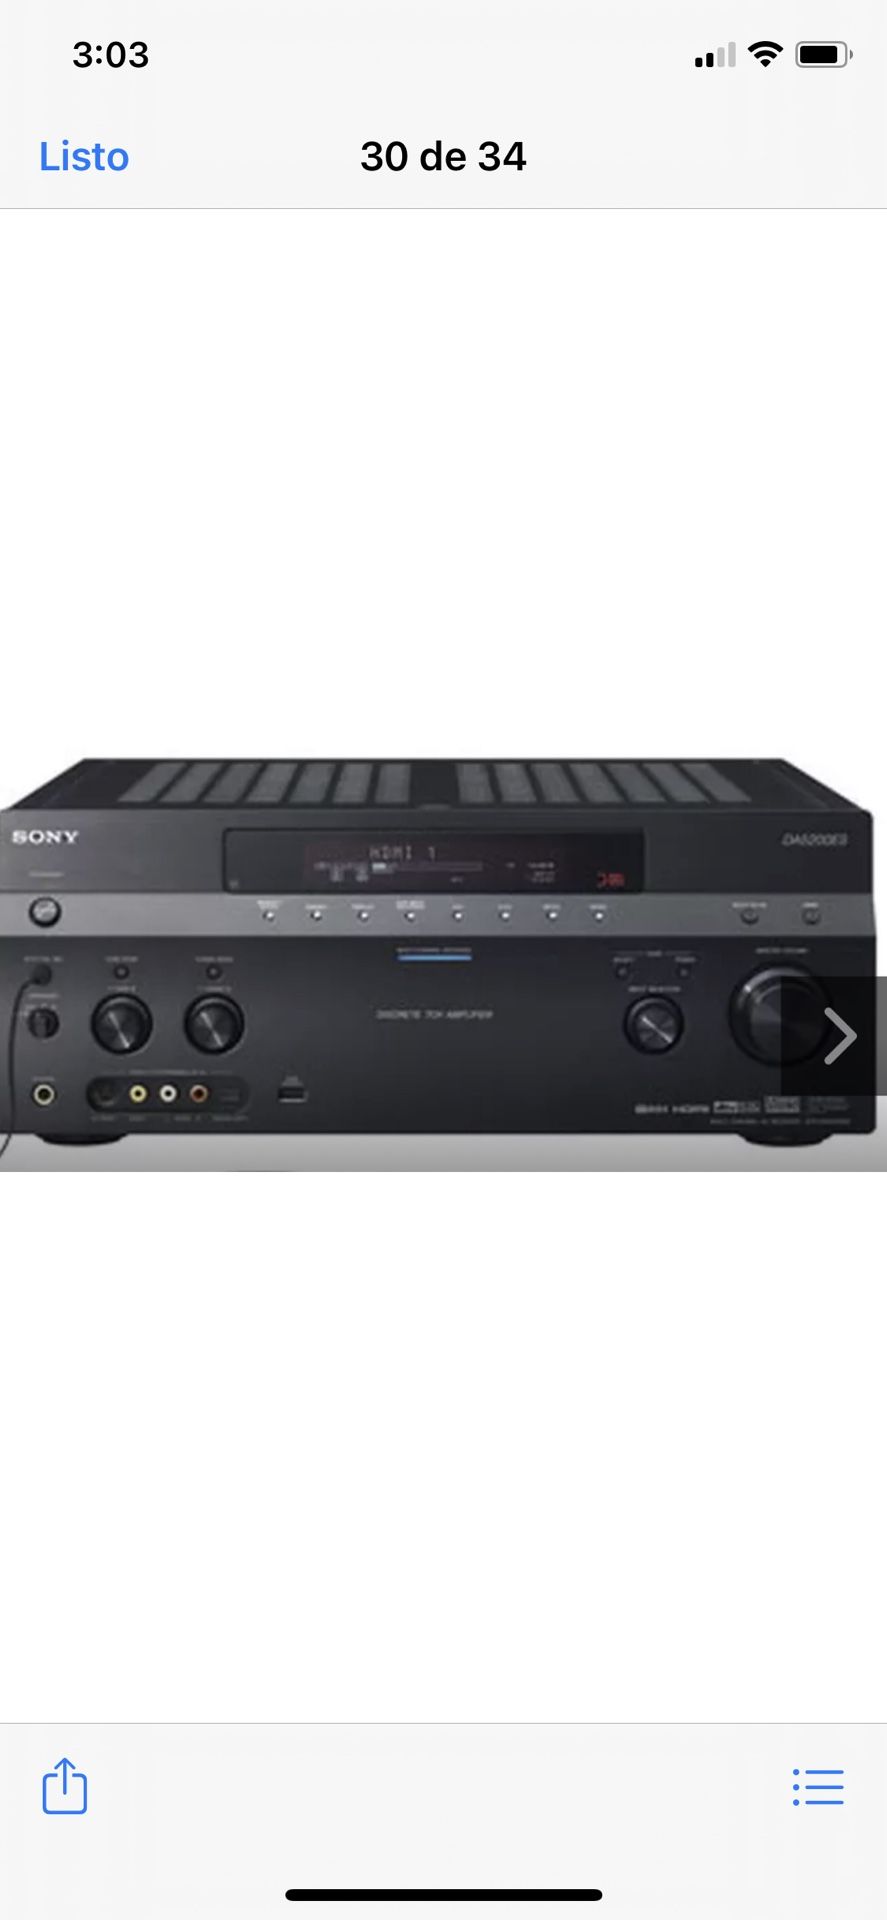 Sony STR-DA5200ES Audio Receiver